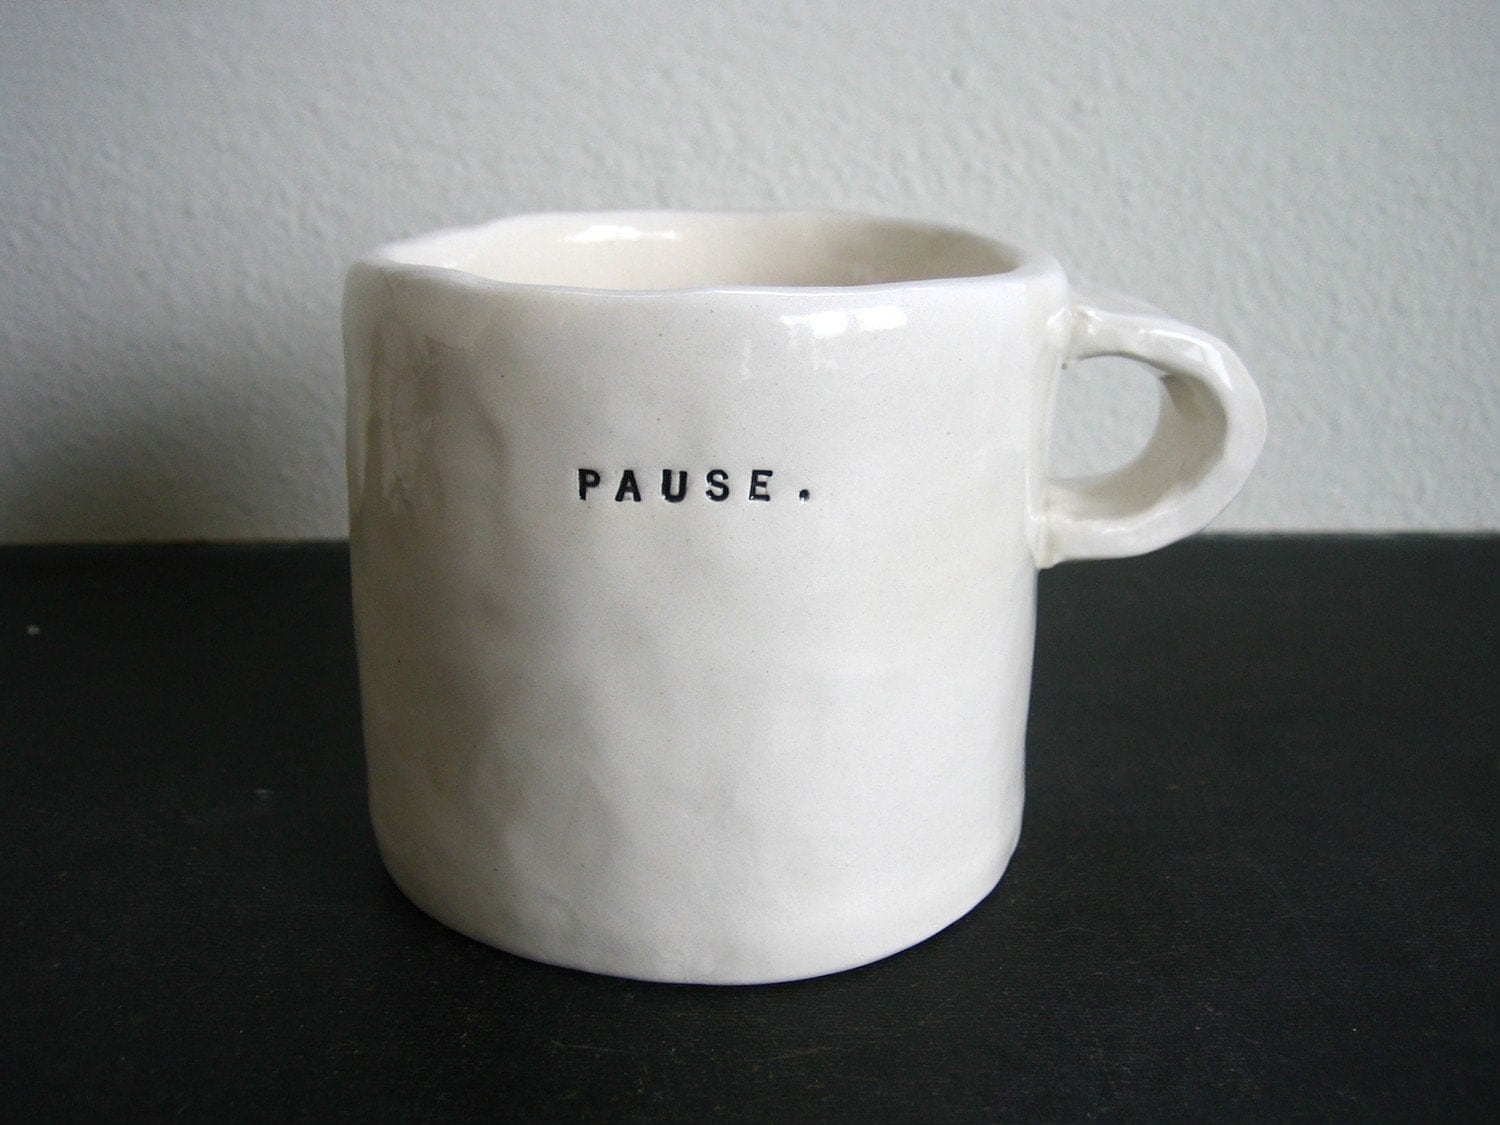  PAUSE  mug 